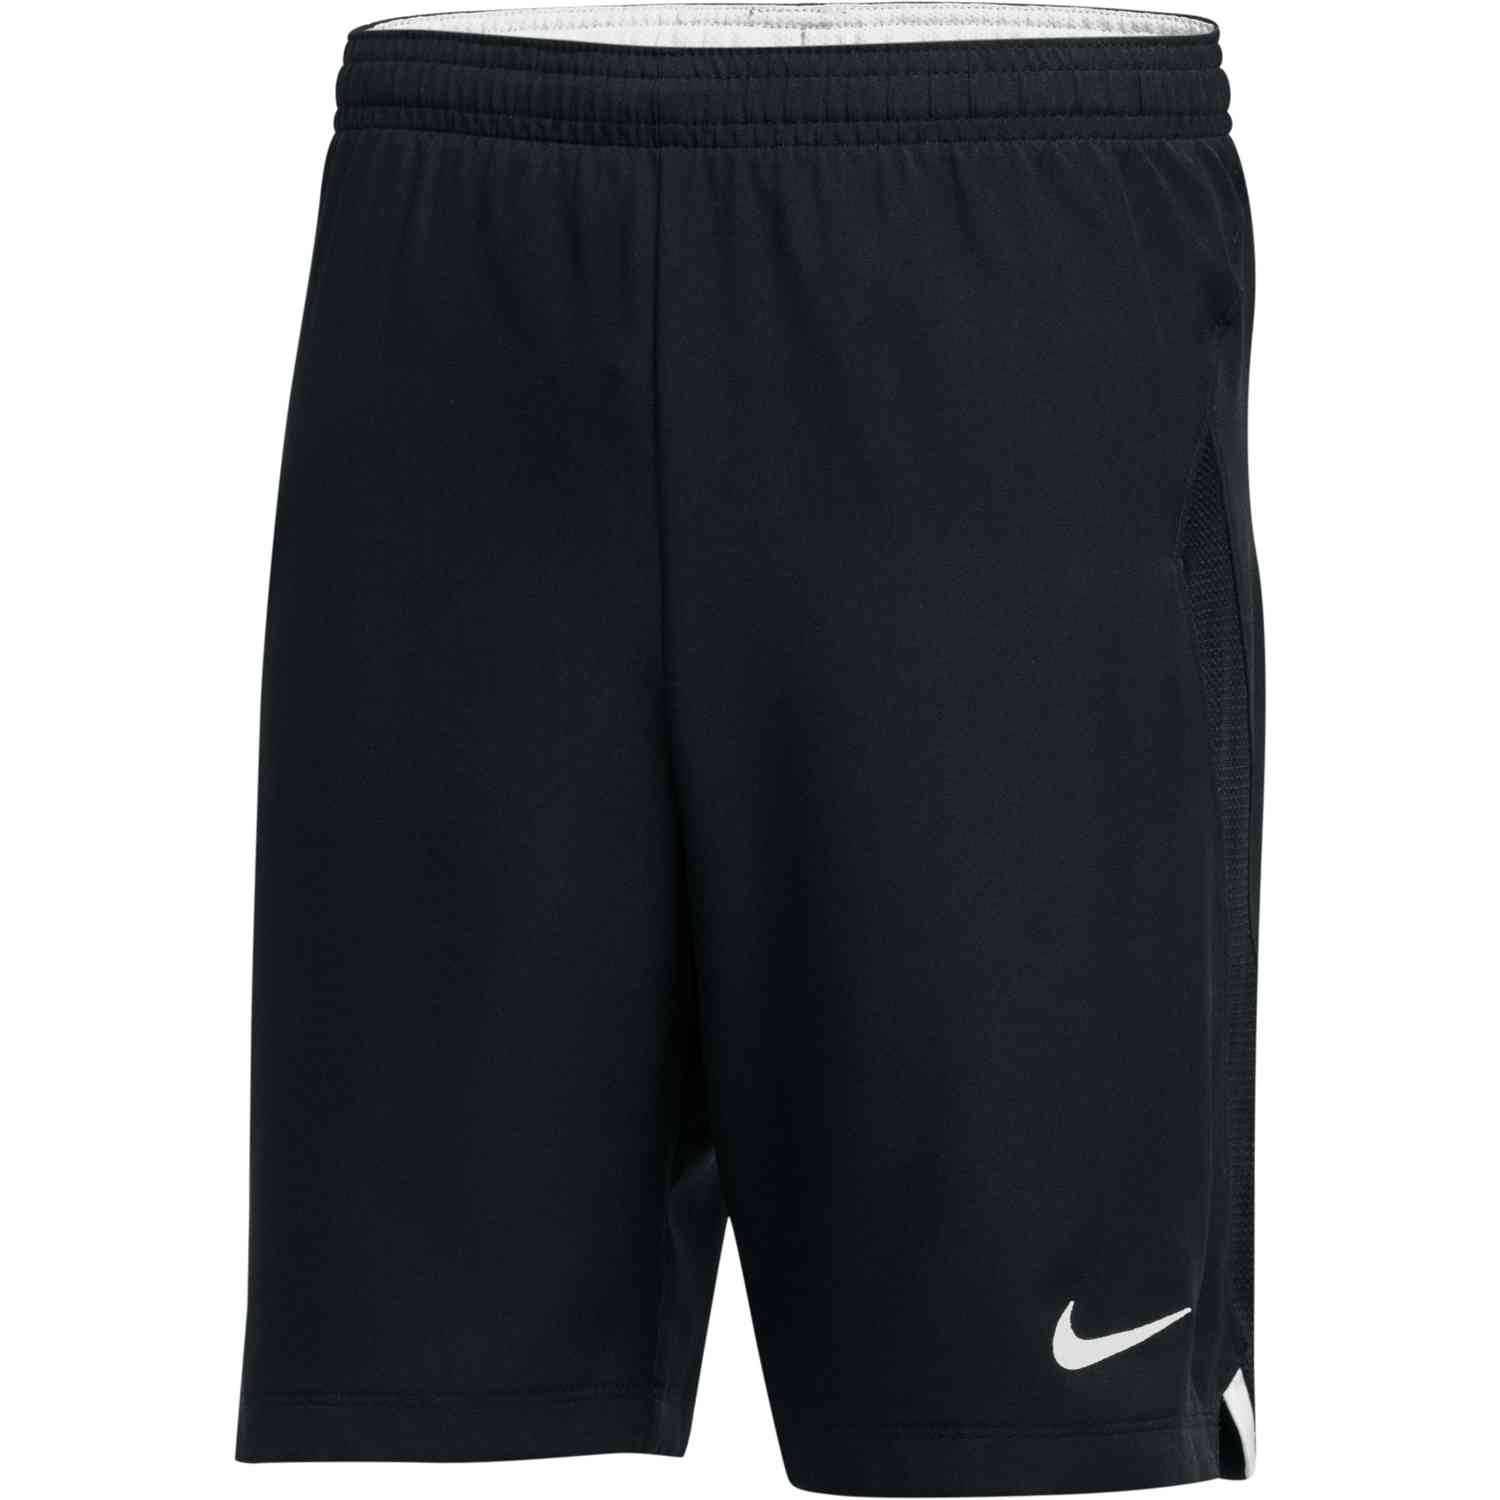 Nike Dri Fit Youth Soccer Shorts - FitnessRetro